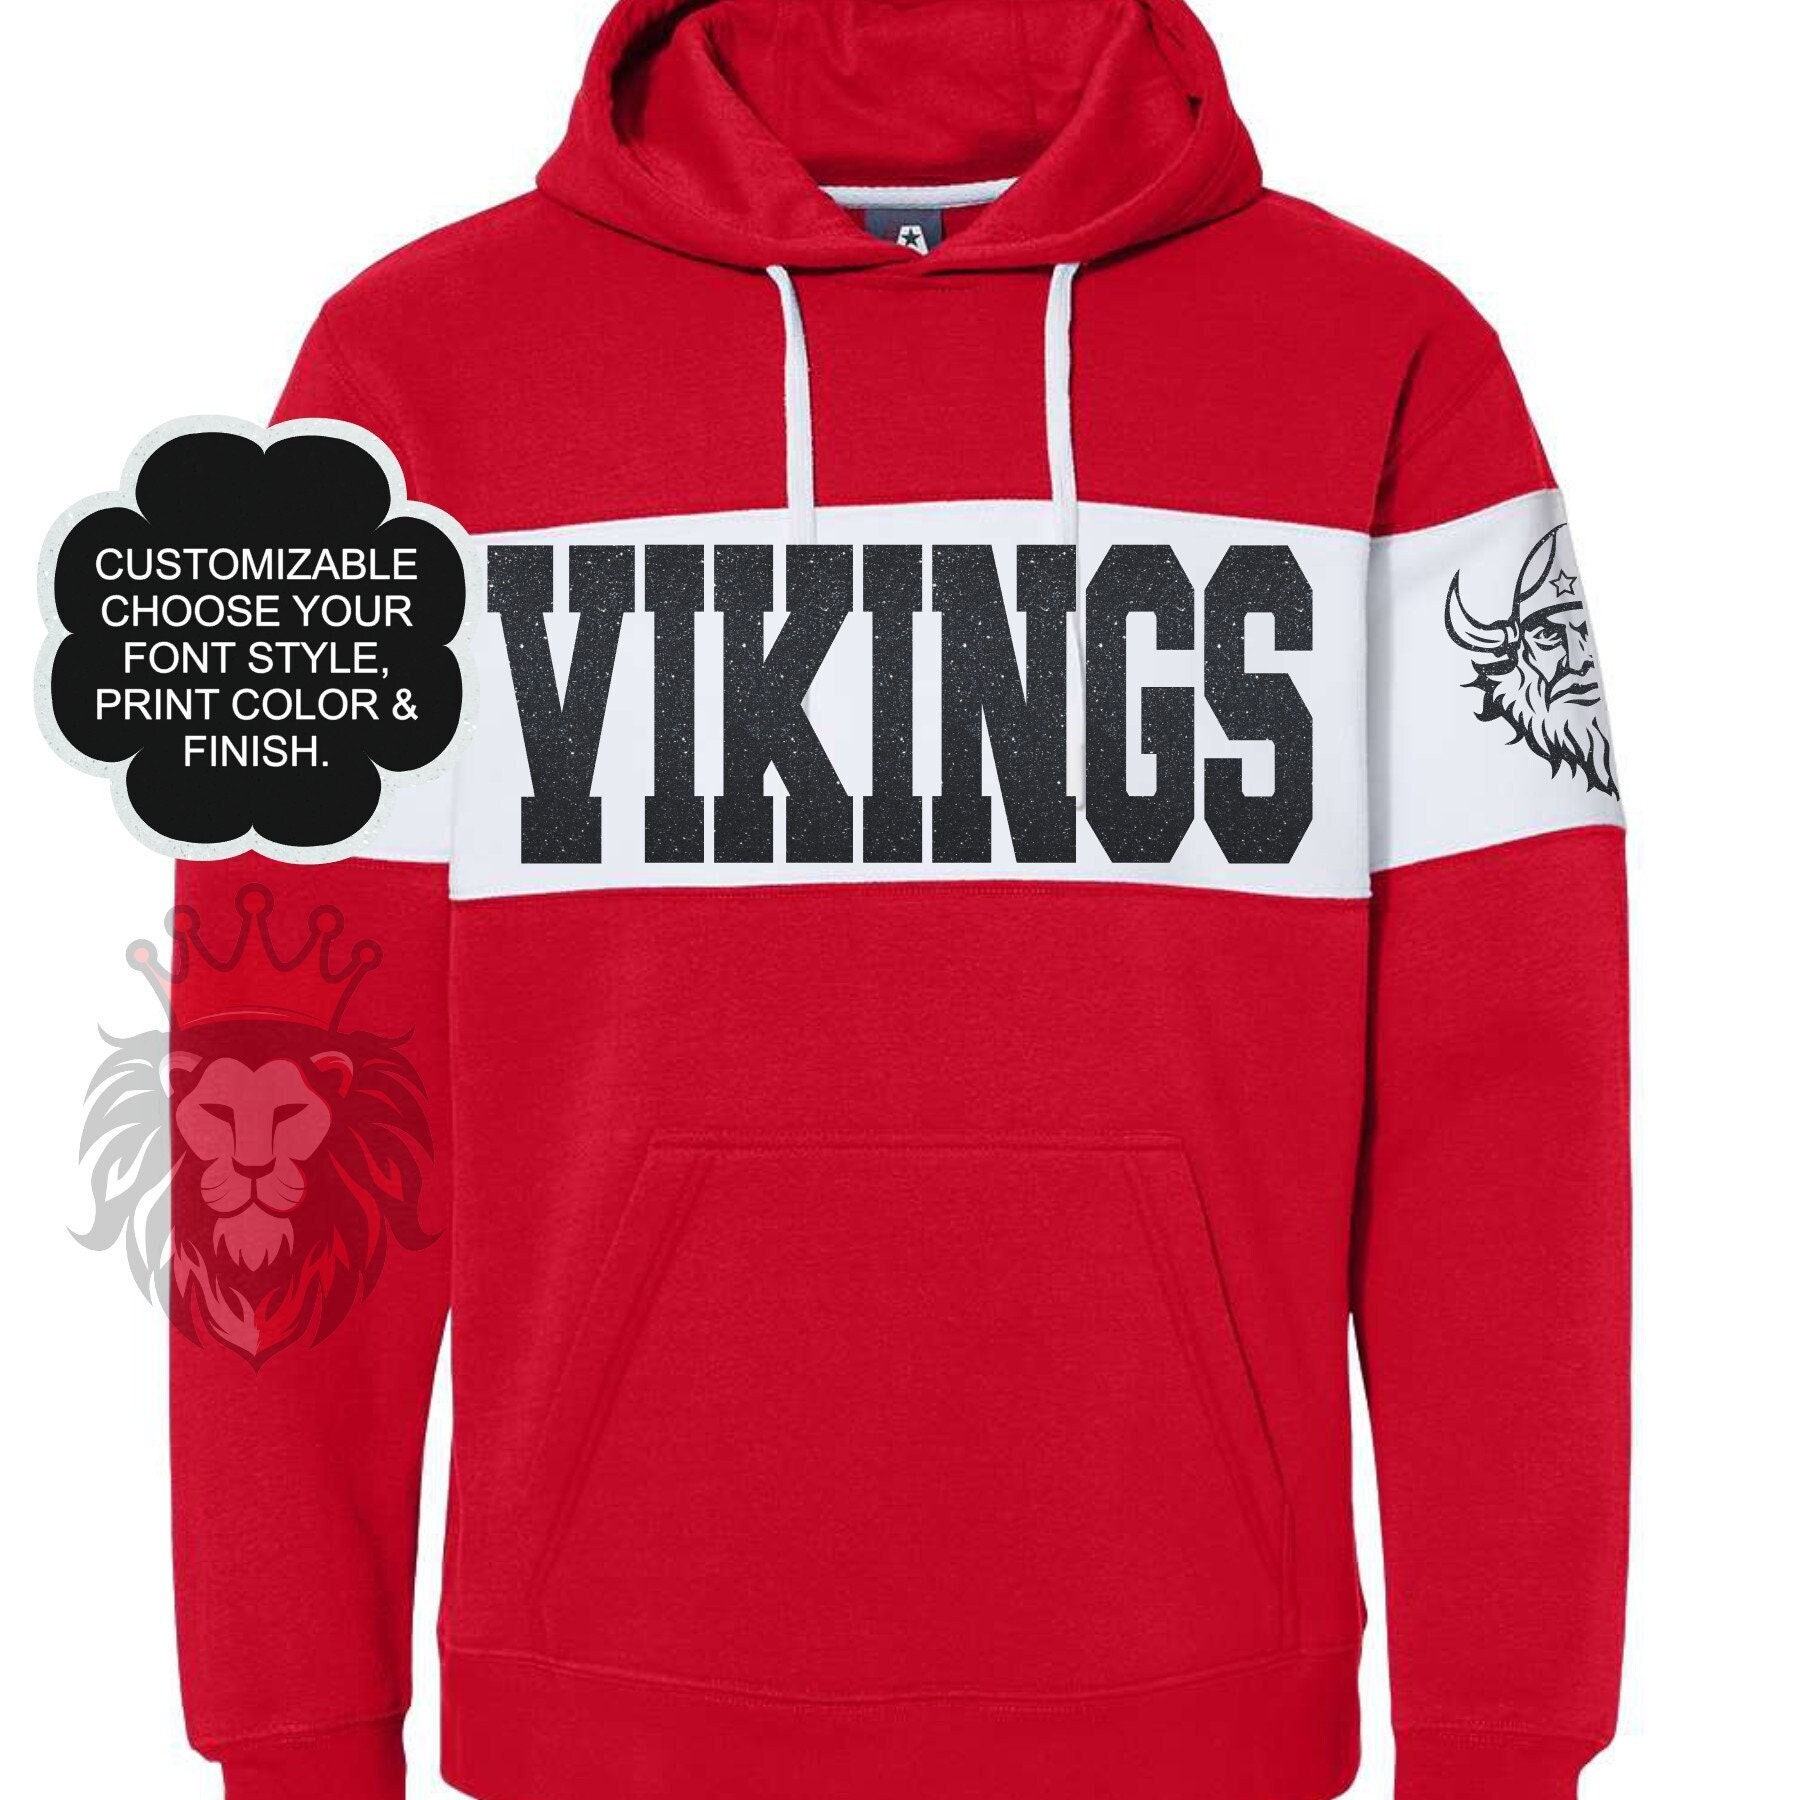 Minnesota Vikings NFL Special Grateful Dead Personalized Hoodie T Shirt -  Growkoc